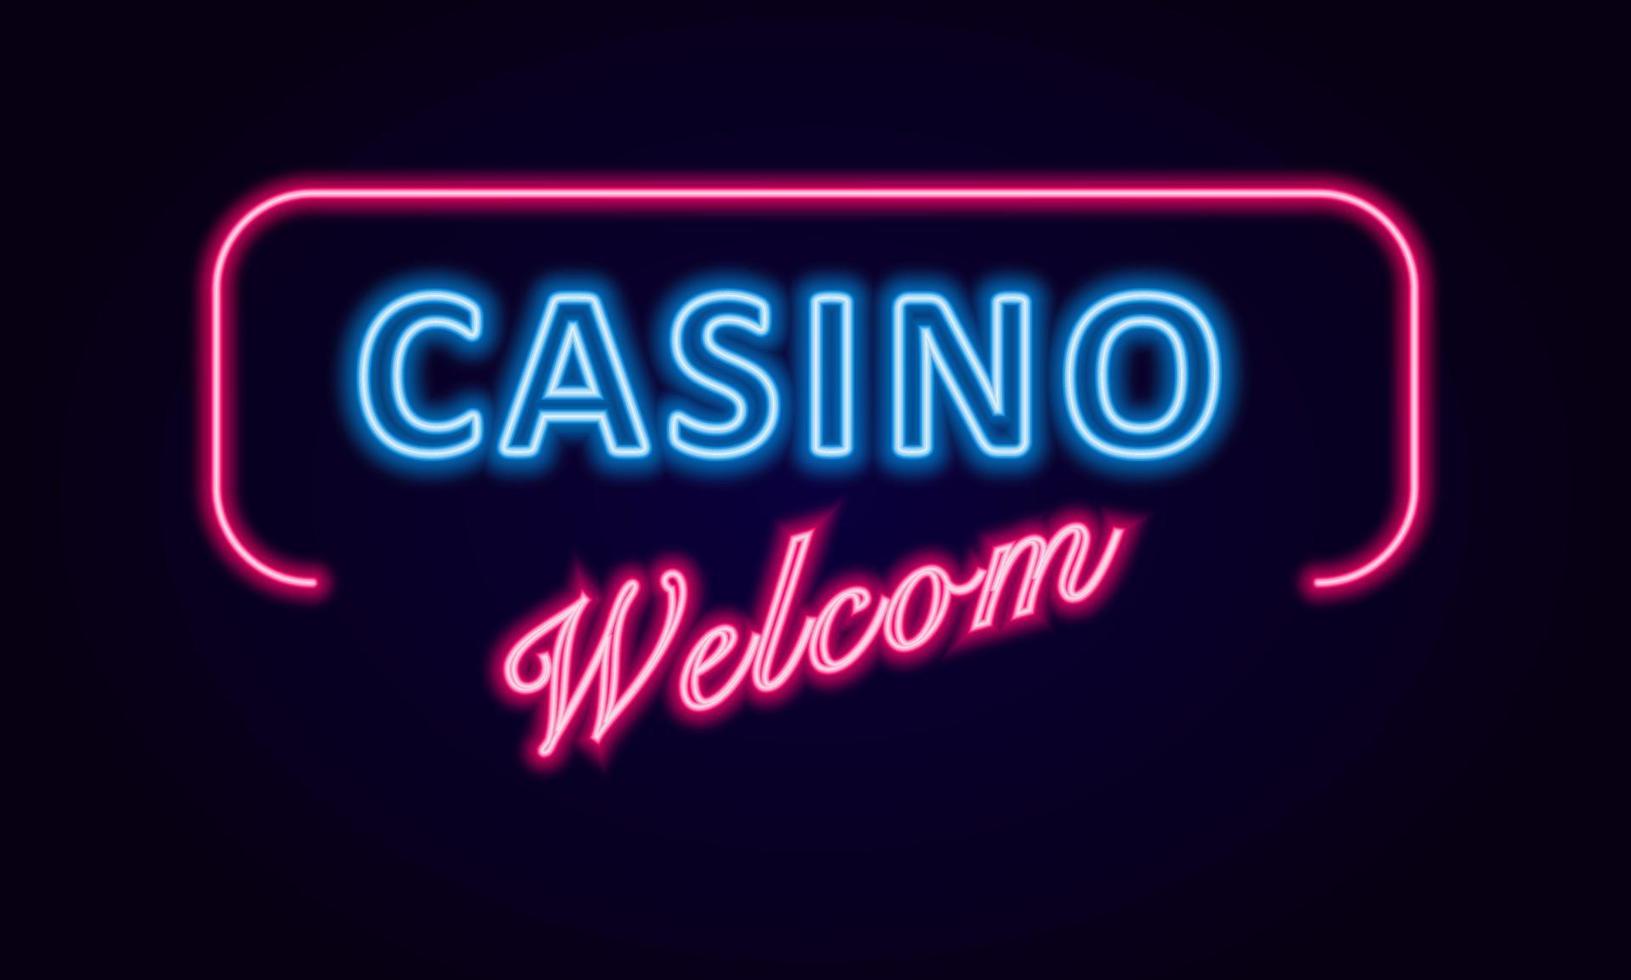 Casino logo in neon style. Design template. Neon sign, light banner, billboard, bright light advertising gambling, casino, poker. illustration vector